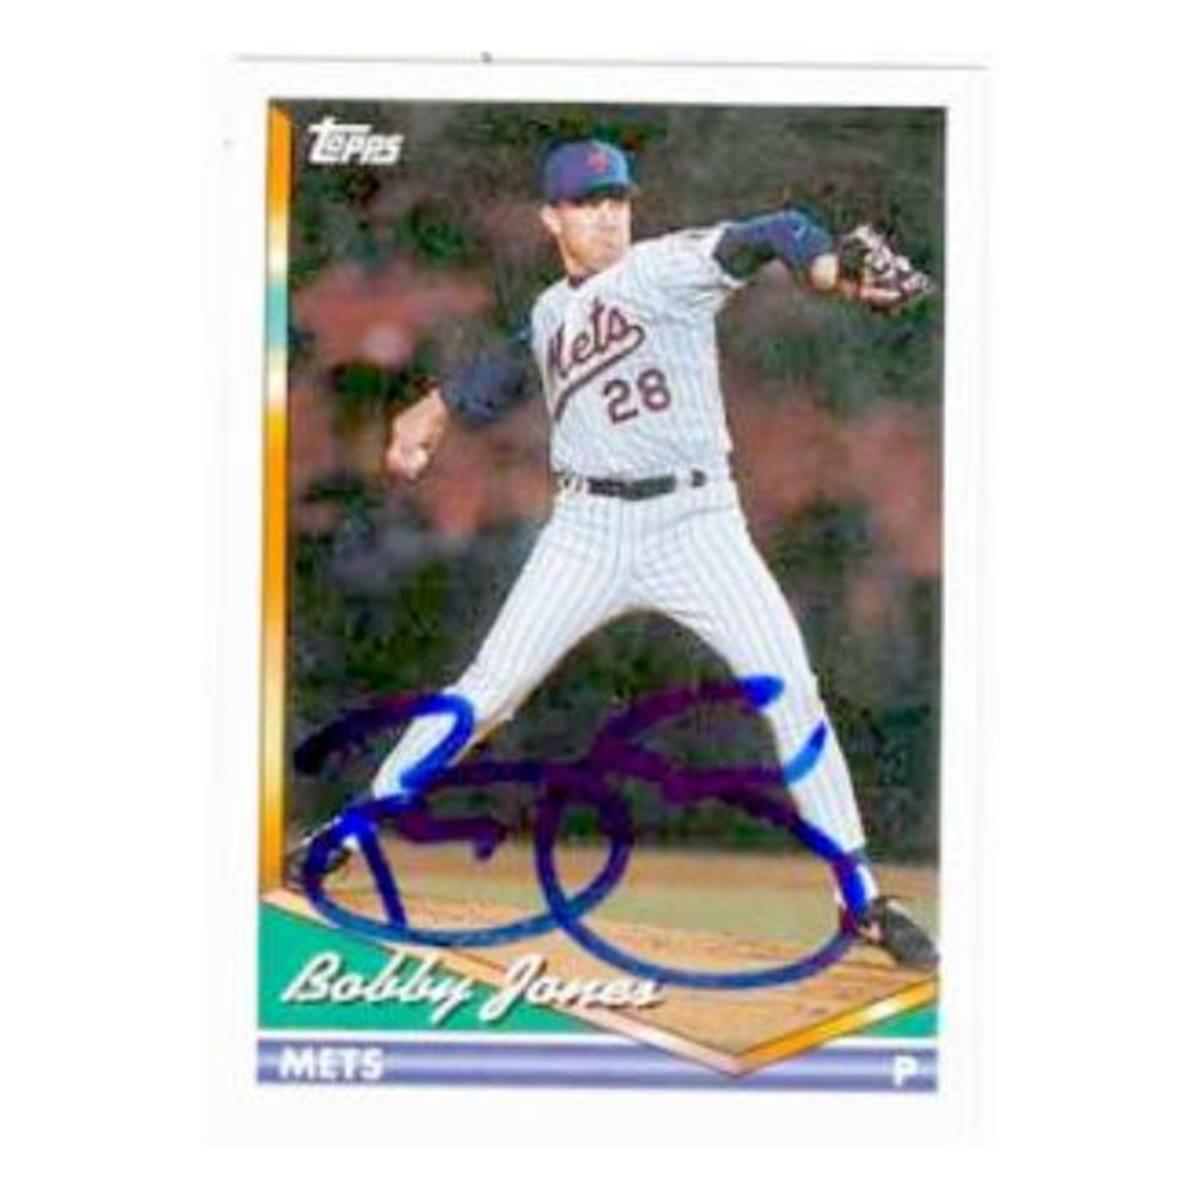 586128 Bobby Jones Autographed Baseball Card - New York Mets - 1994 Topps No.539 -  Autograph Warehouse